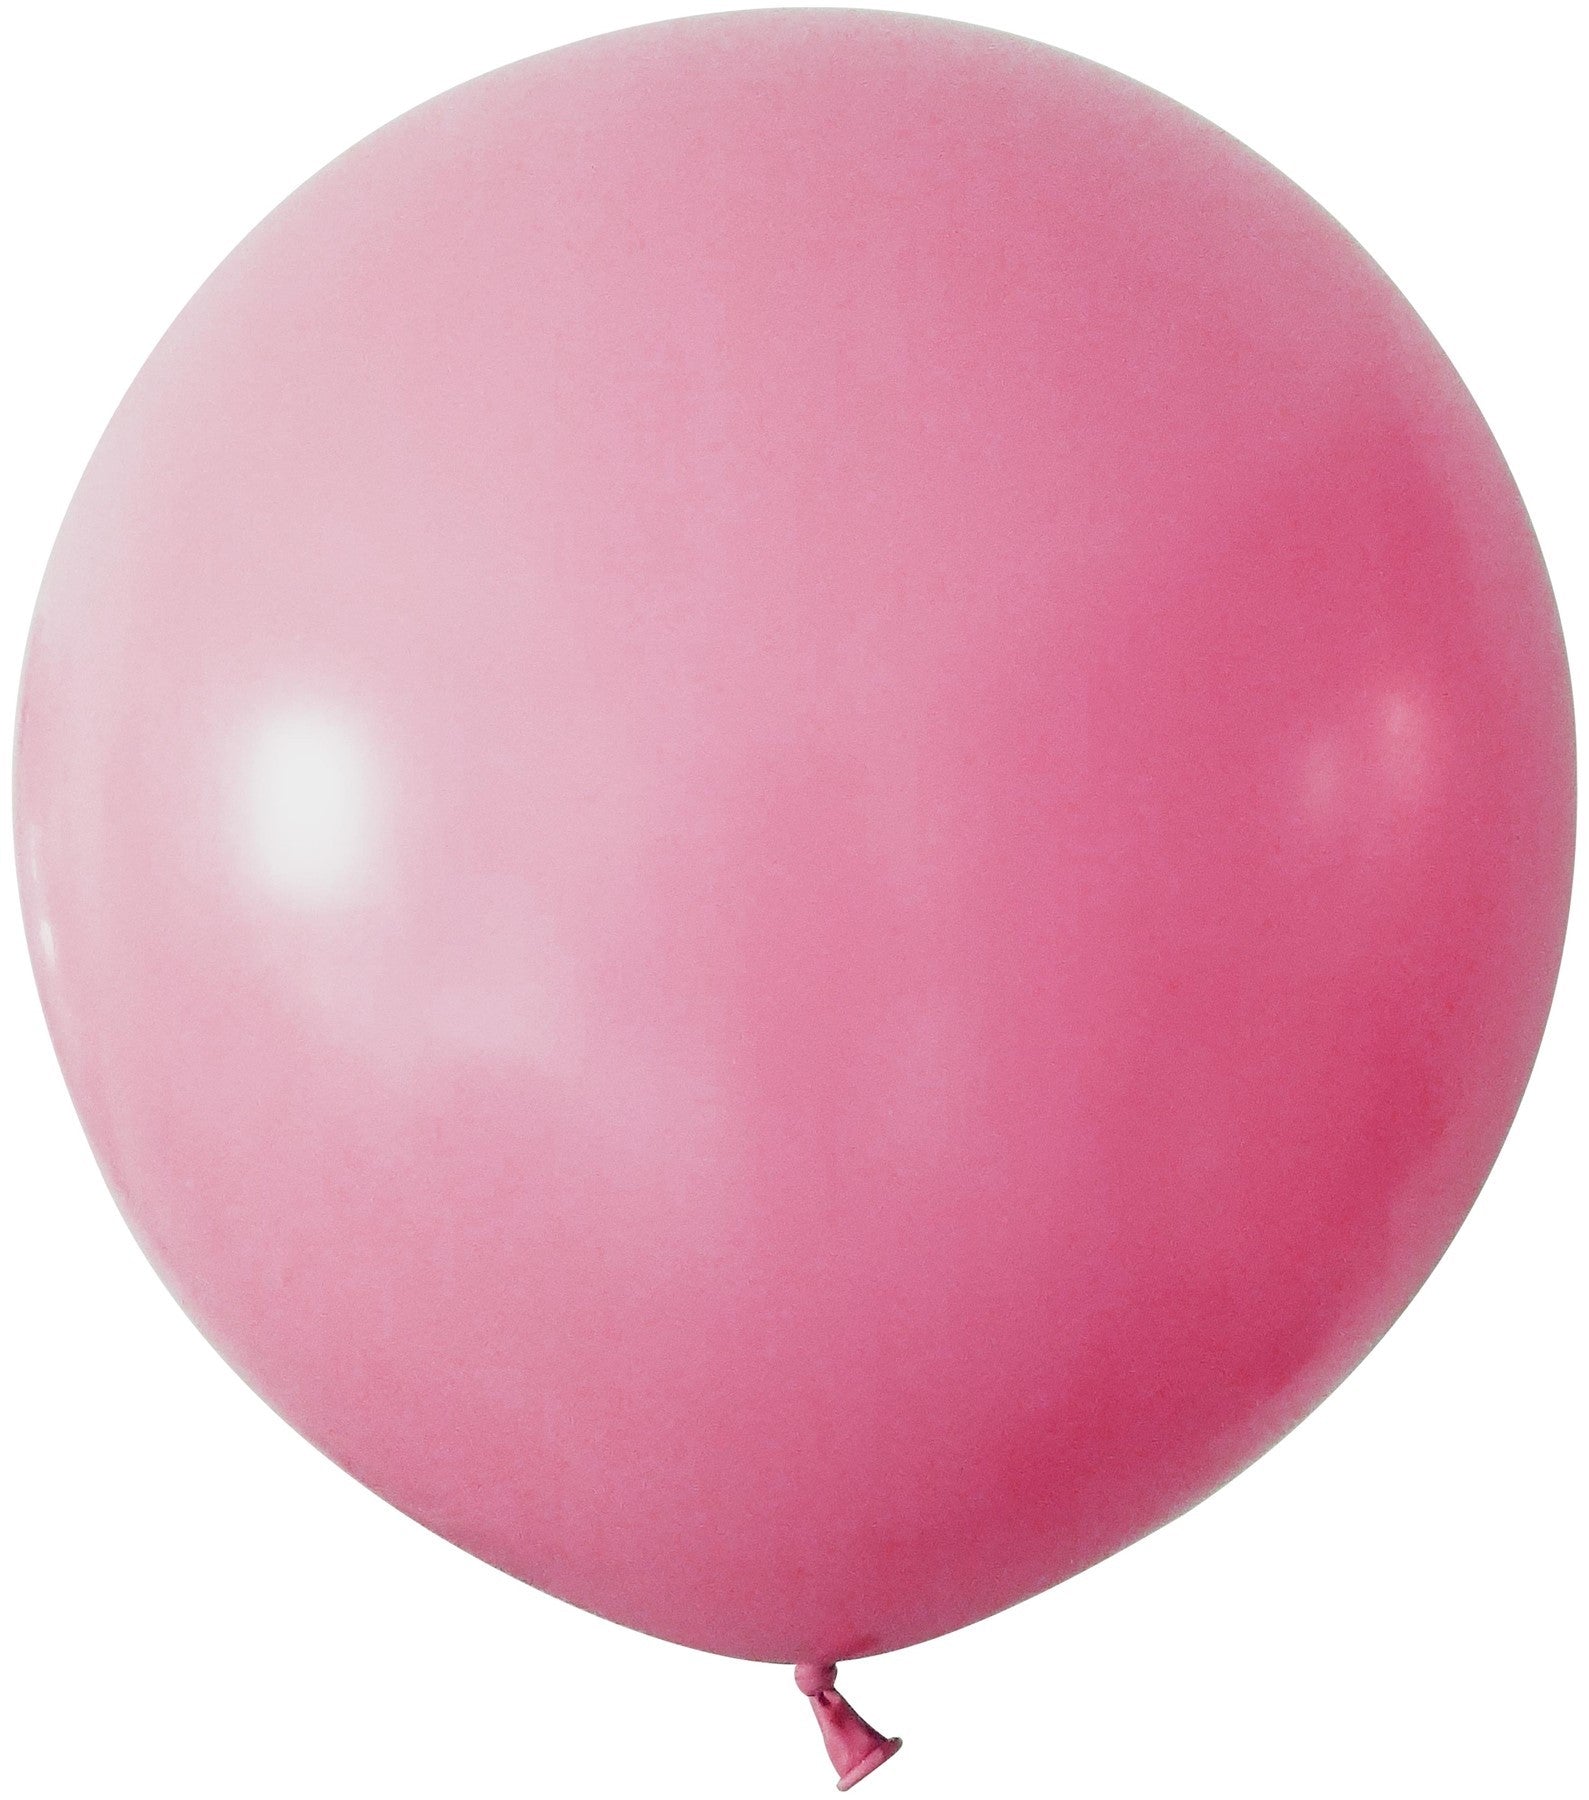 View Pink Jumbo Latex Balloon 24 inch Pk 3 information